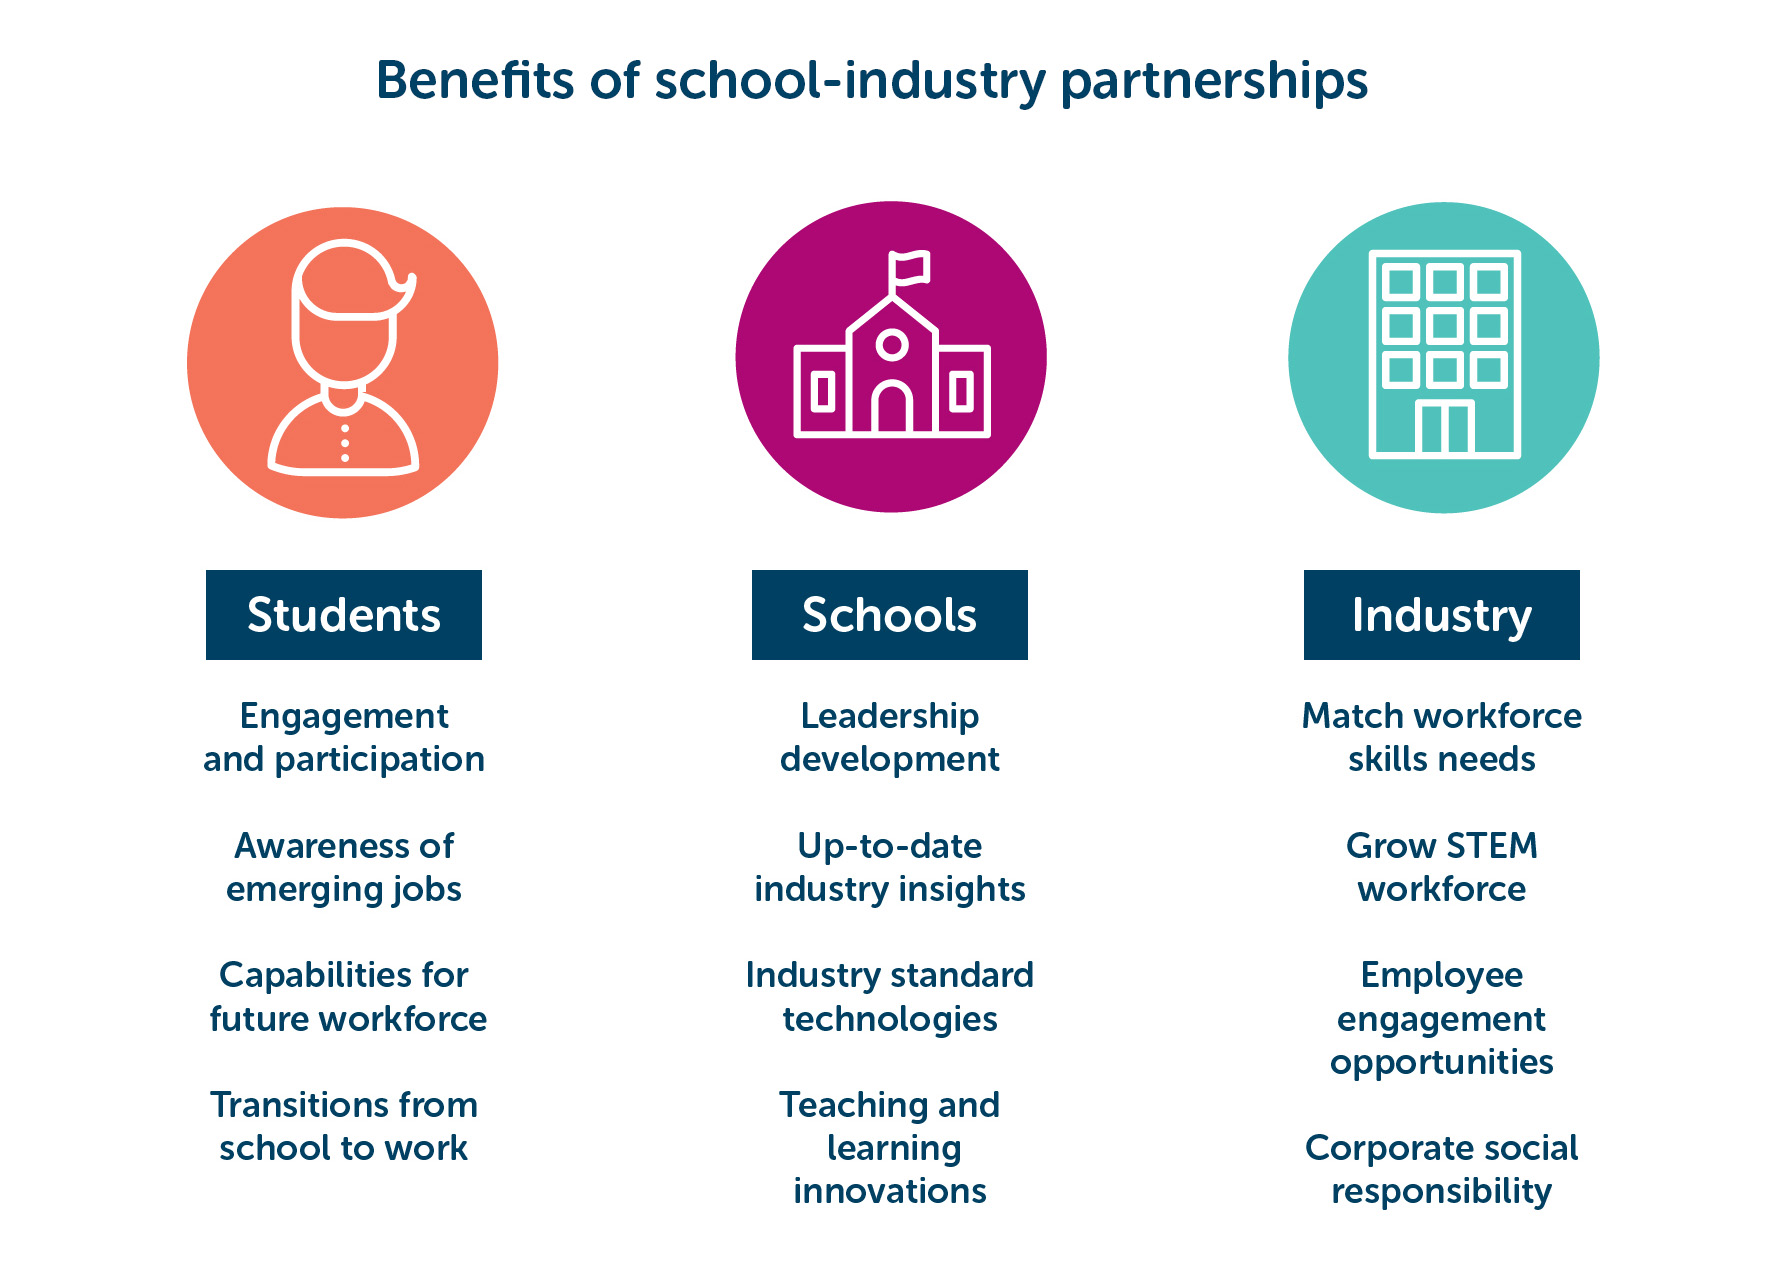  Benefits of school-industry partnerships infographic 